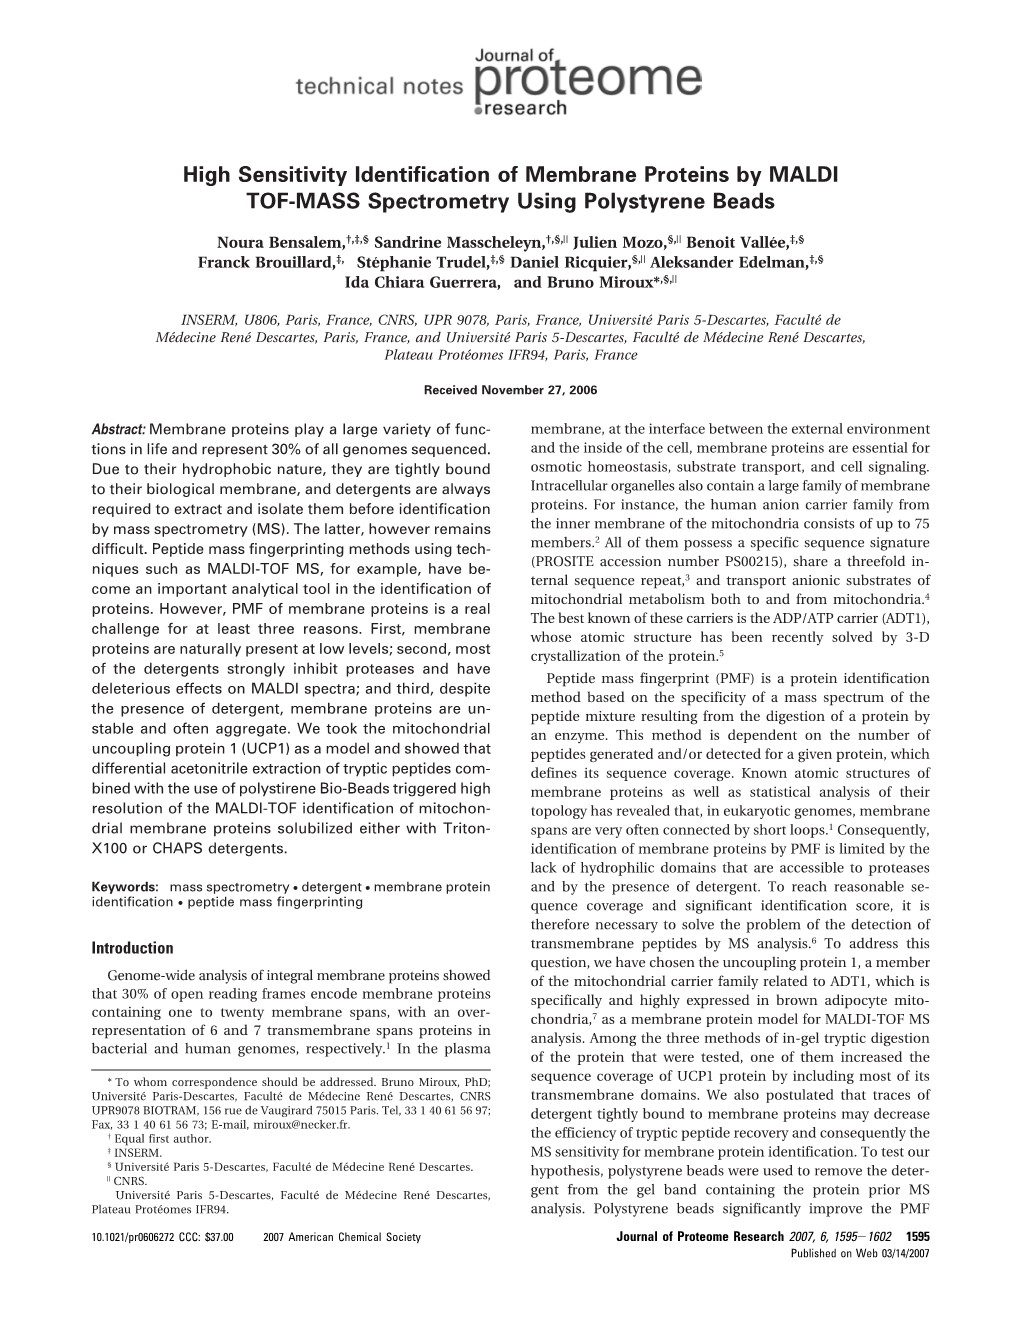 High Sensitivity Identification of Membrane Proteins by MALDI TOF-MASS Spectrometry Using Polystyrene Beads